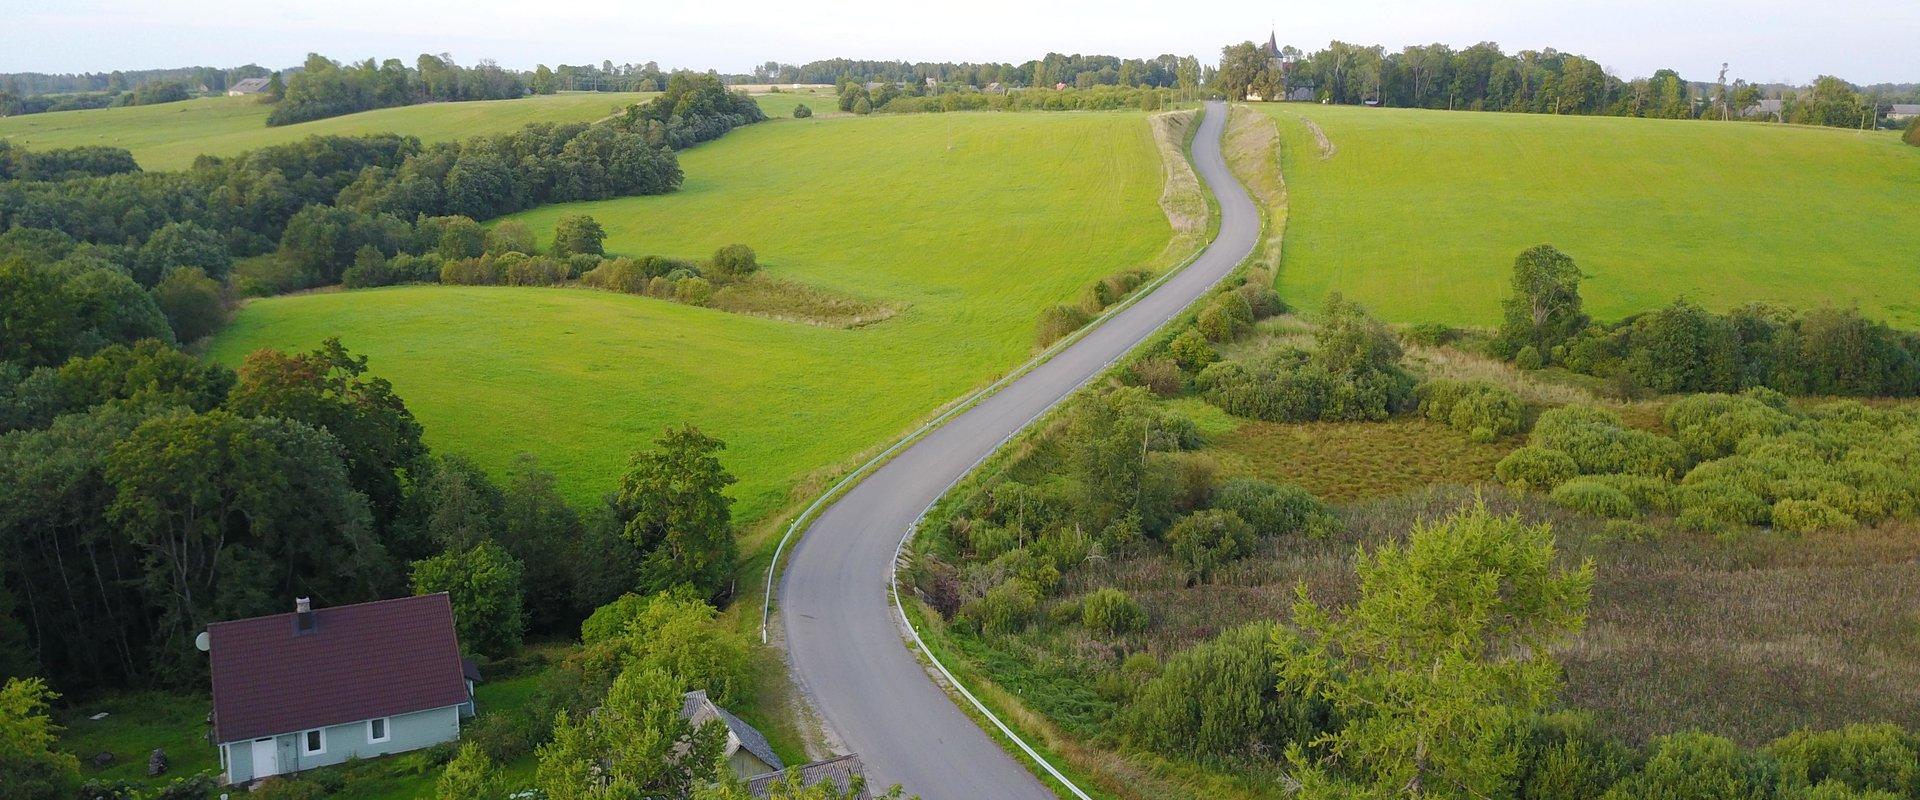 The road in Jõgeva county